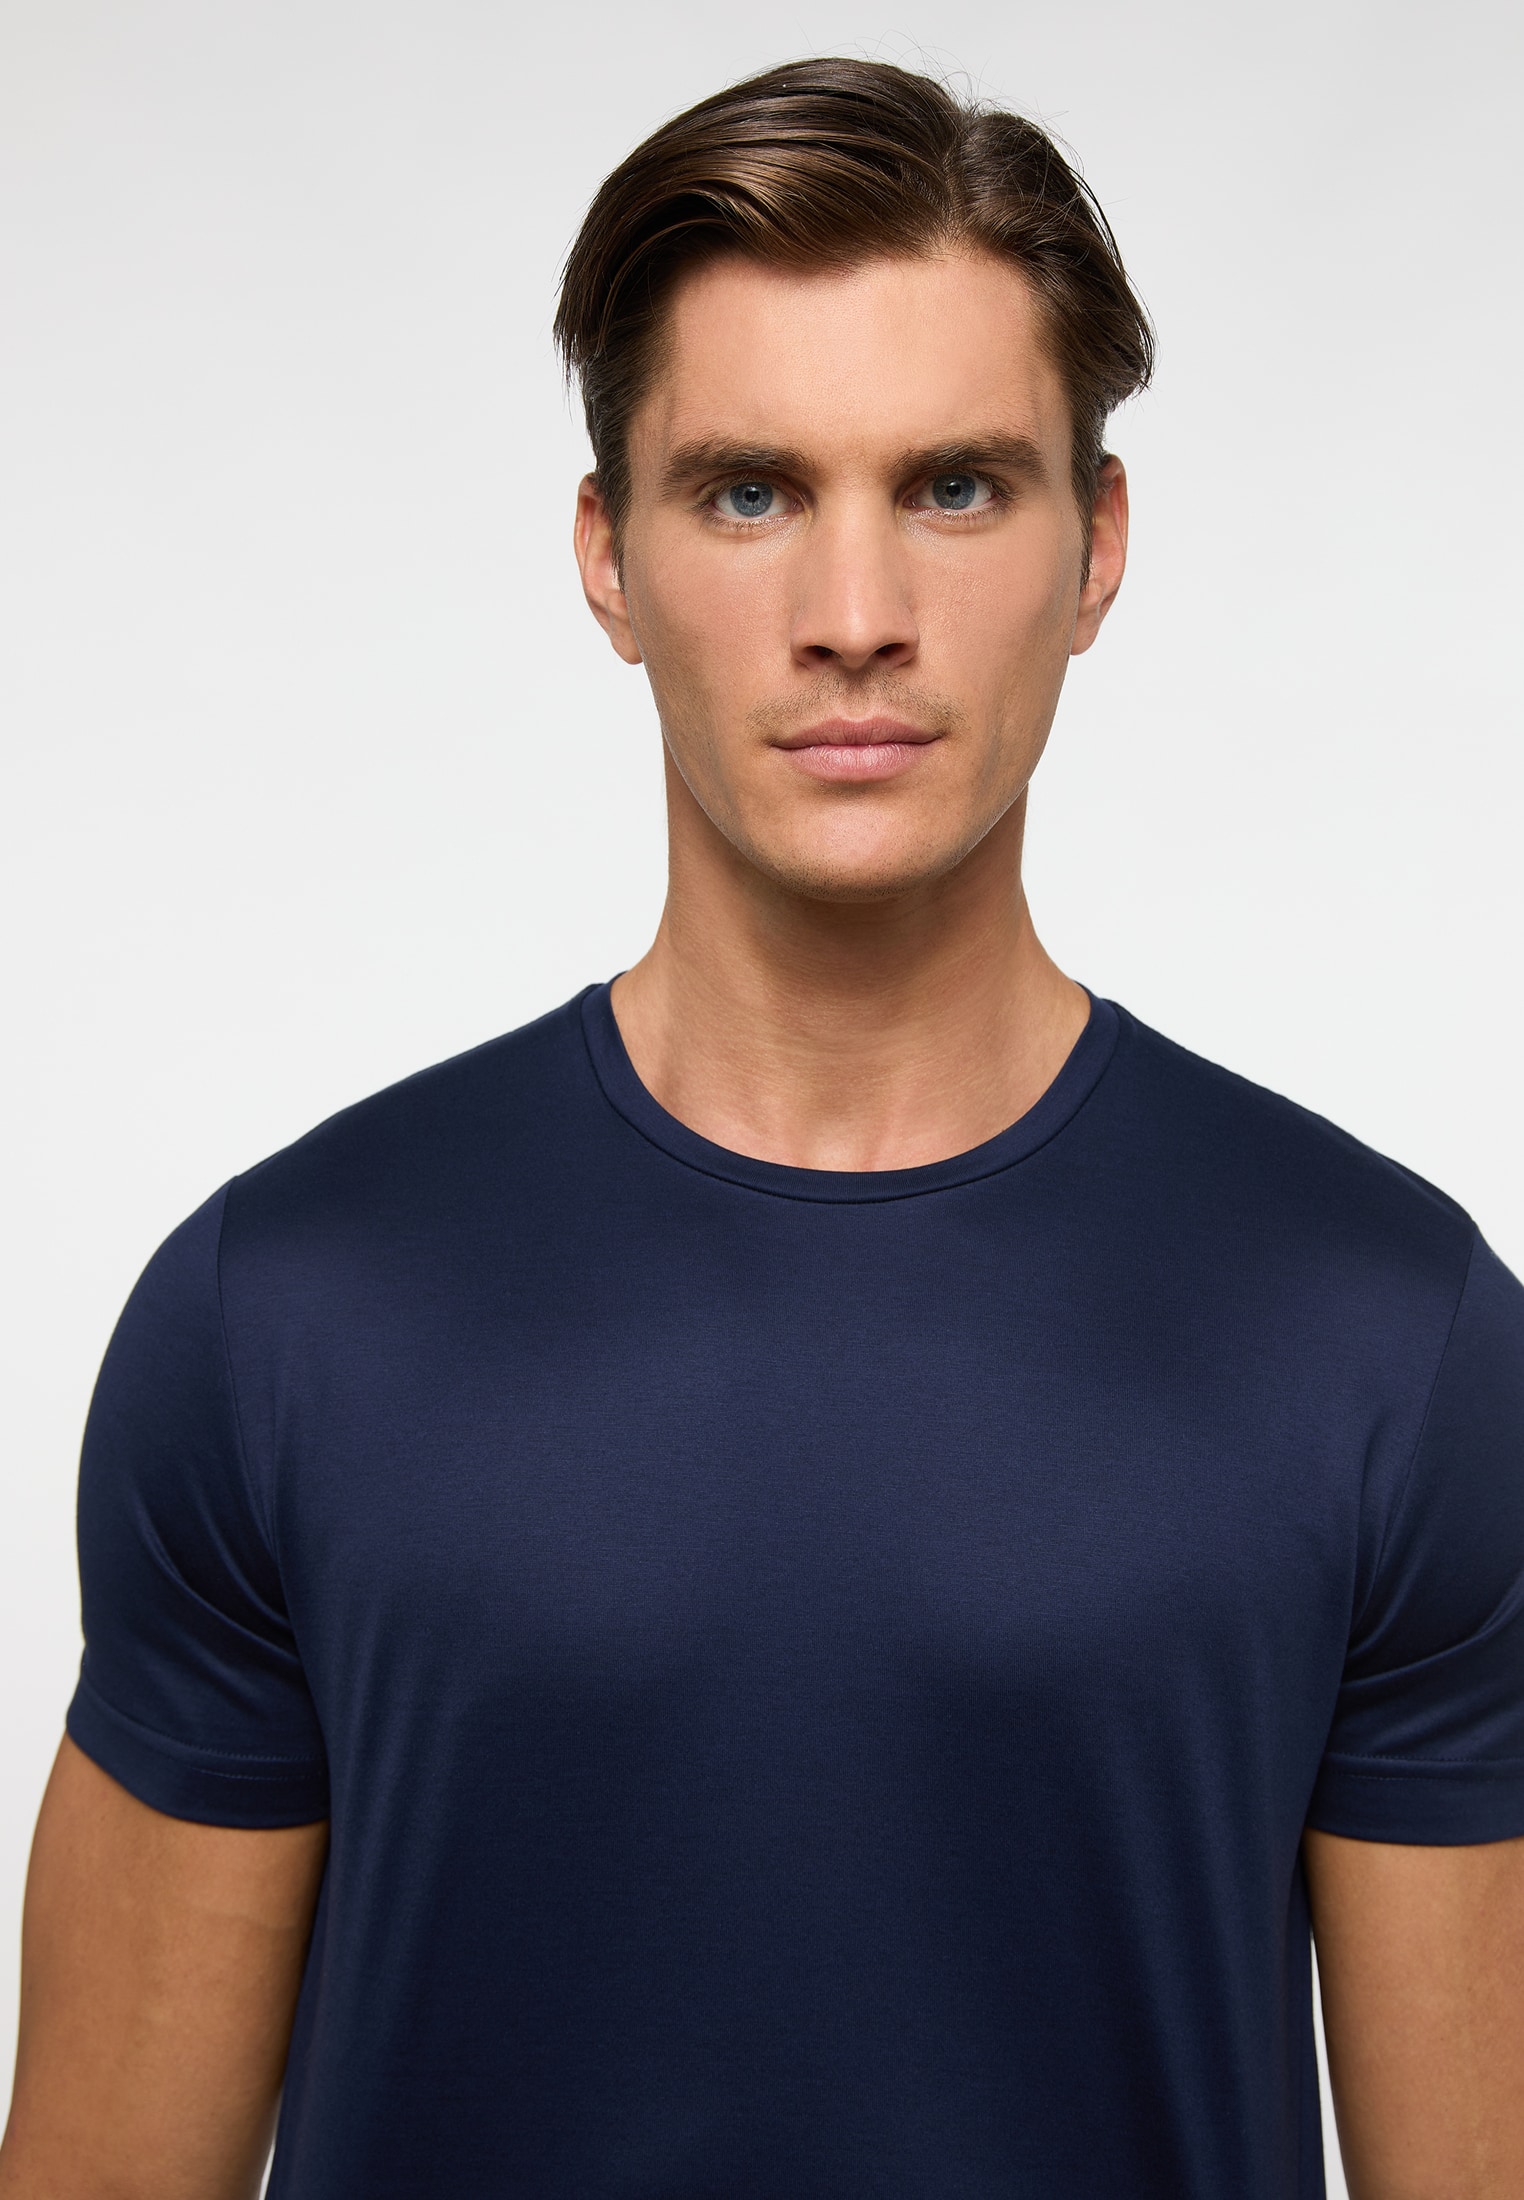 Shirt in dark blue plain